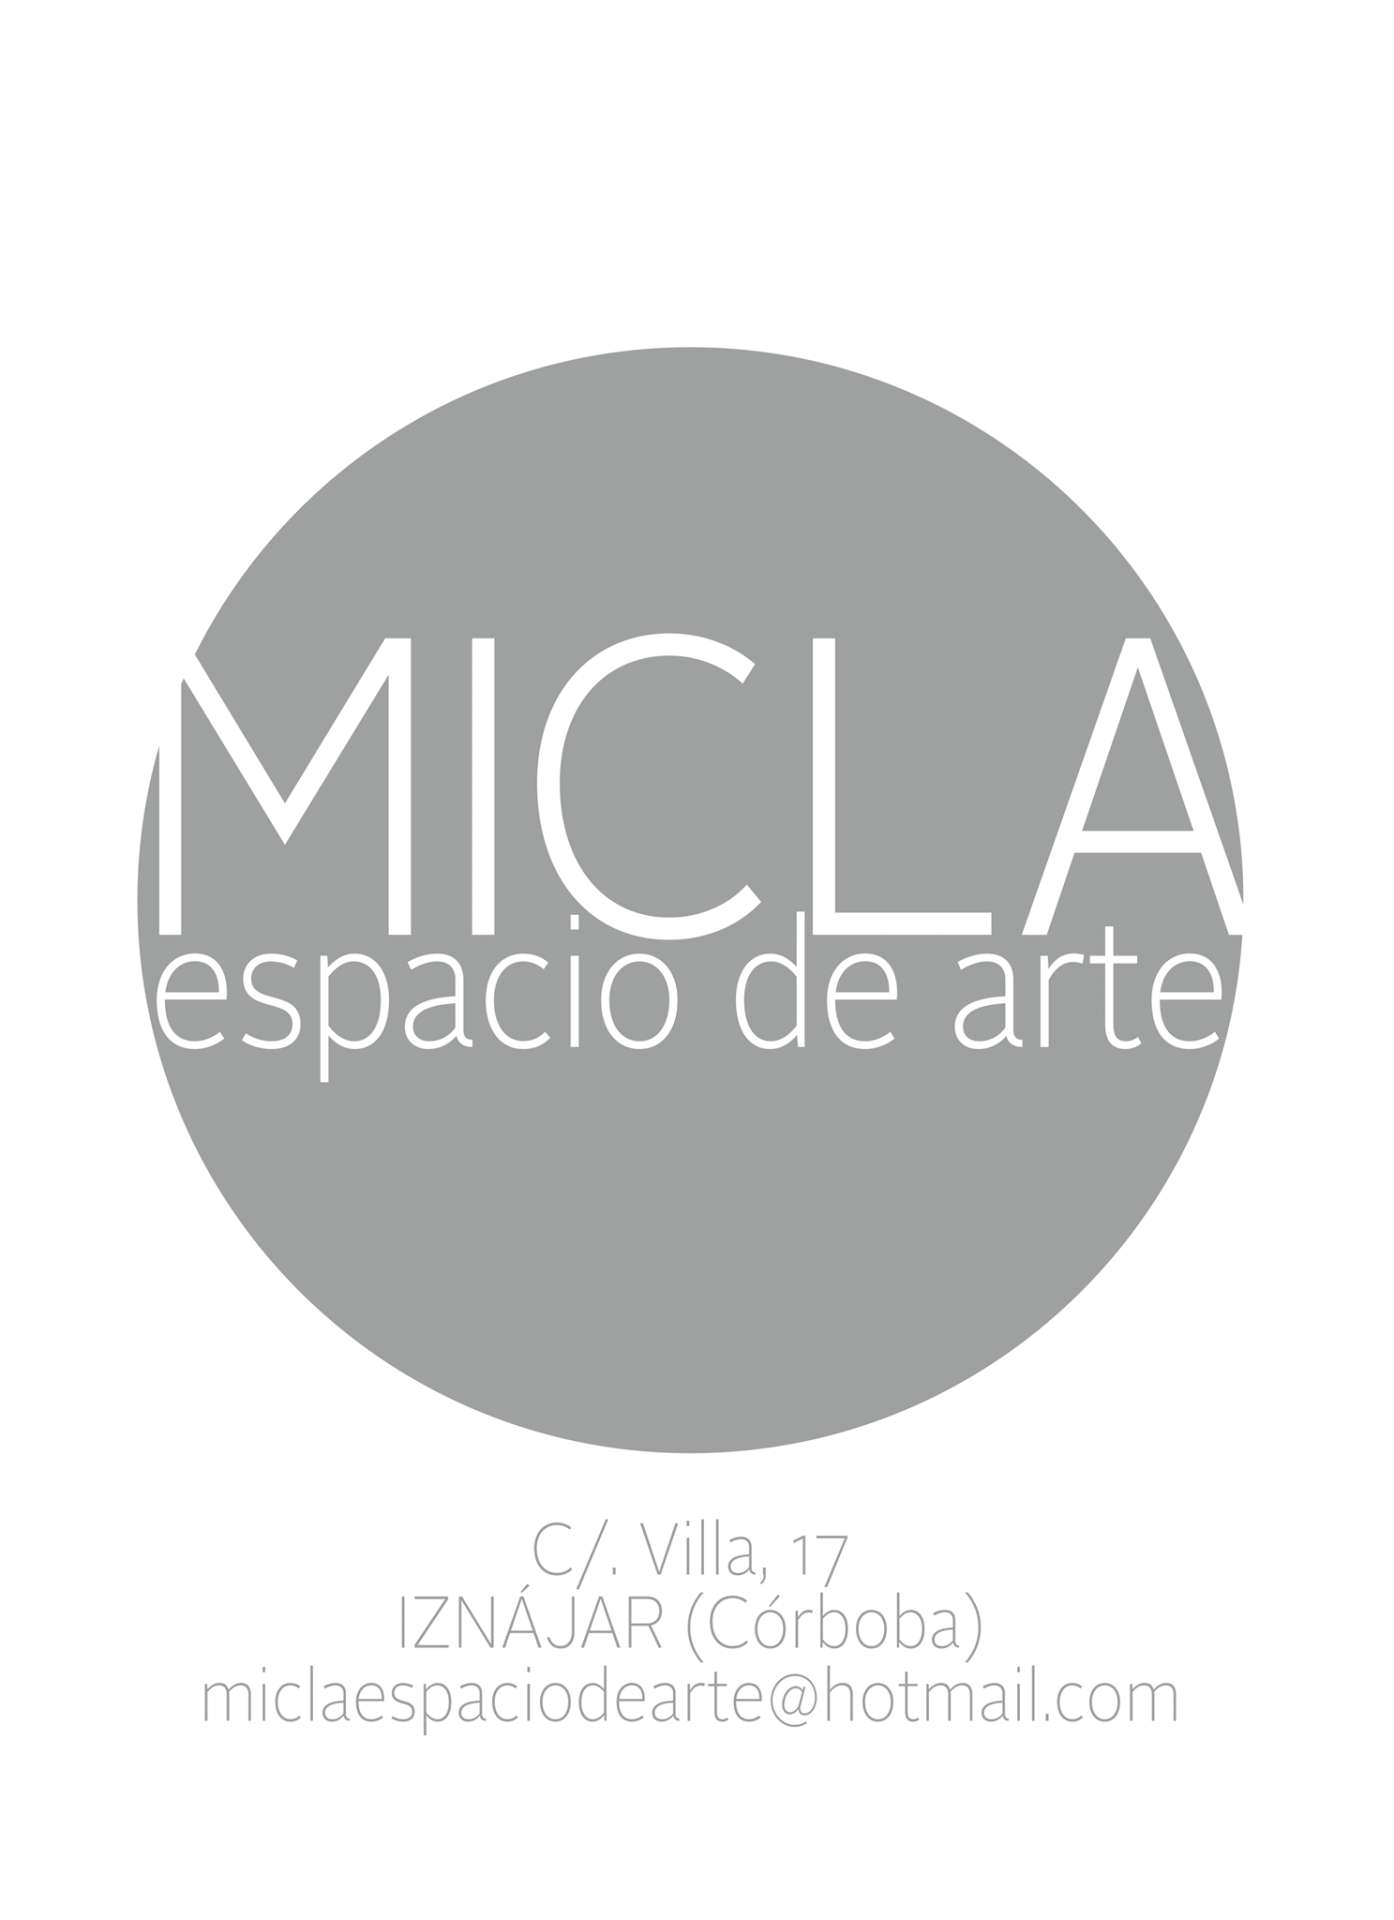 Sala Museo Micla